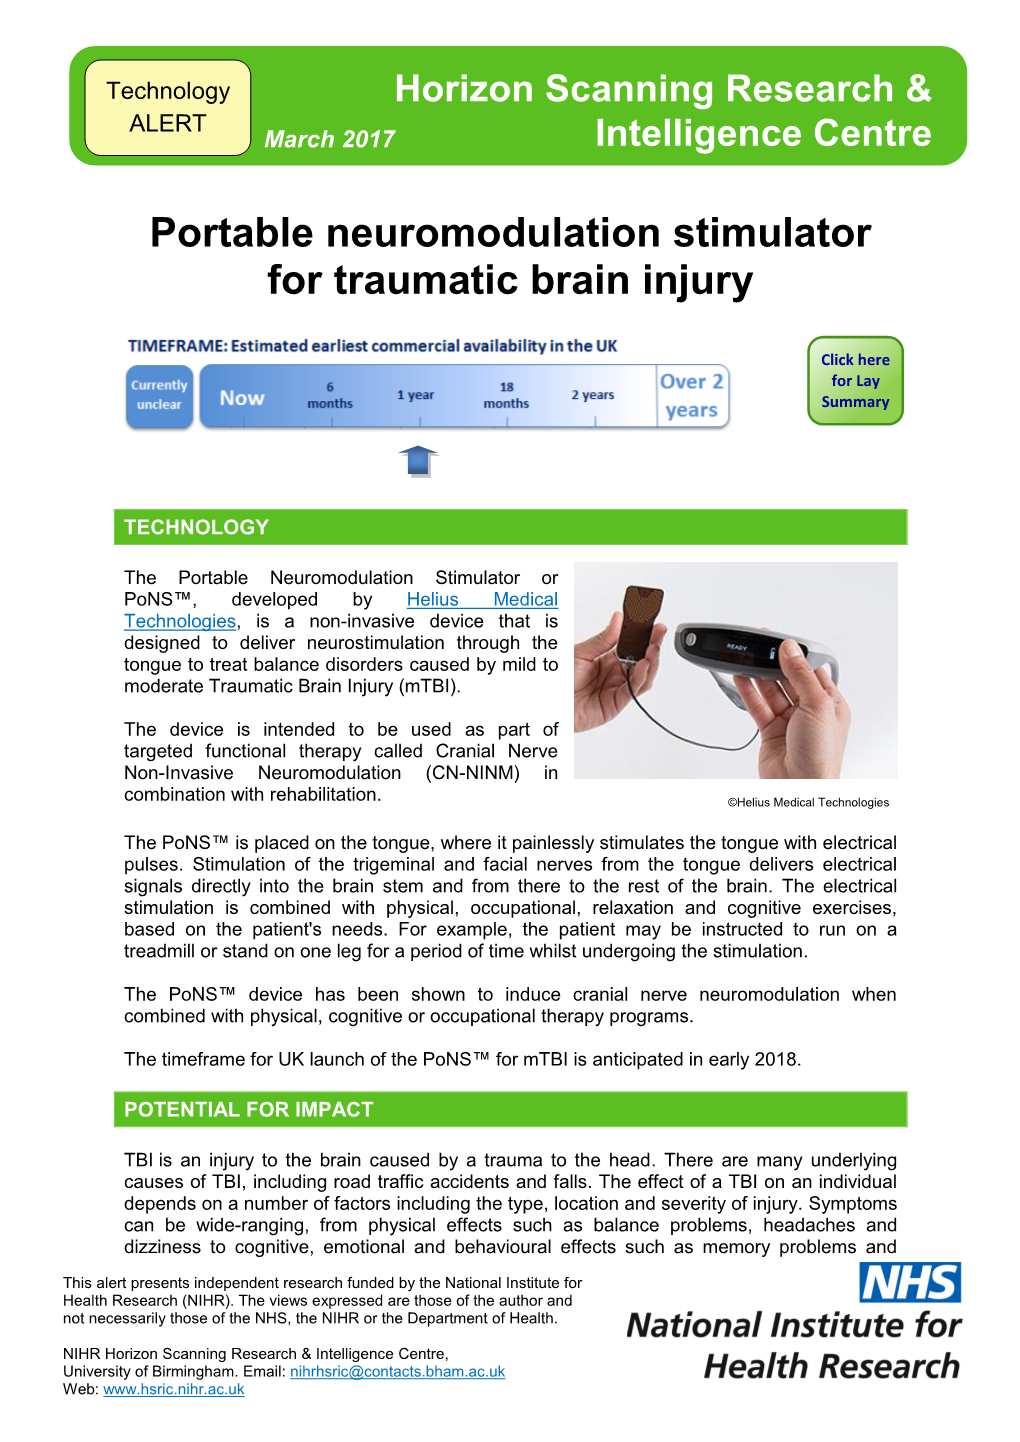 Portable Neuromodulation Stimulator for Traumatic Brain Injury